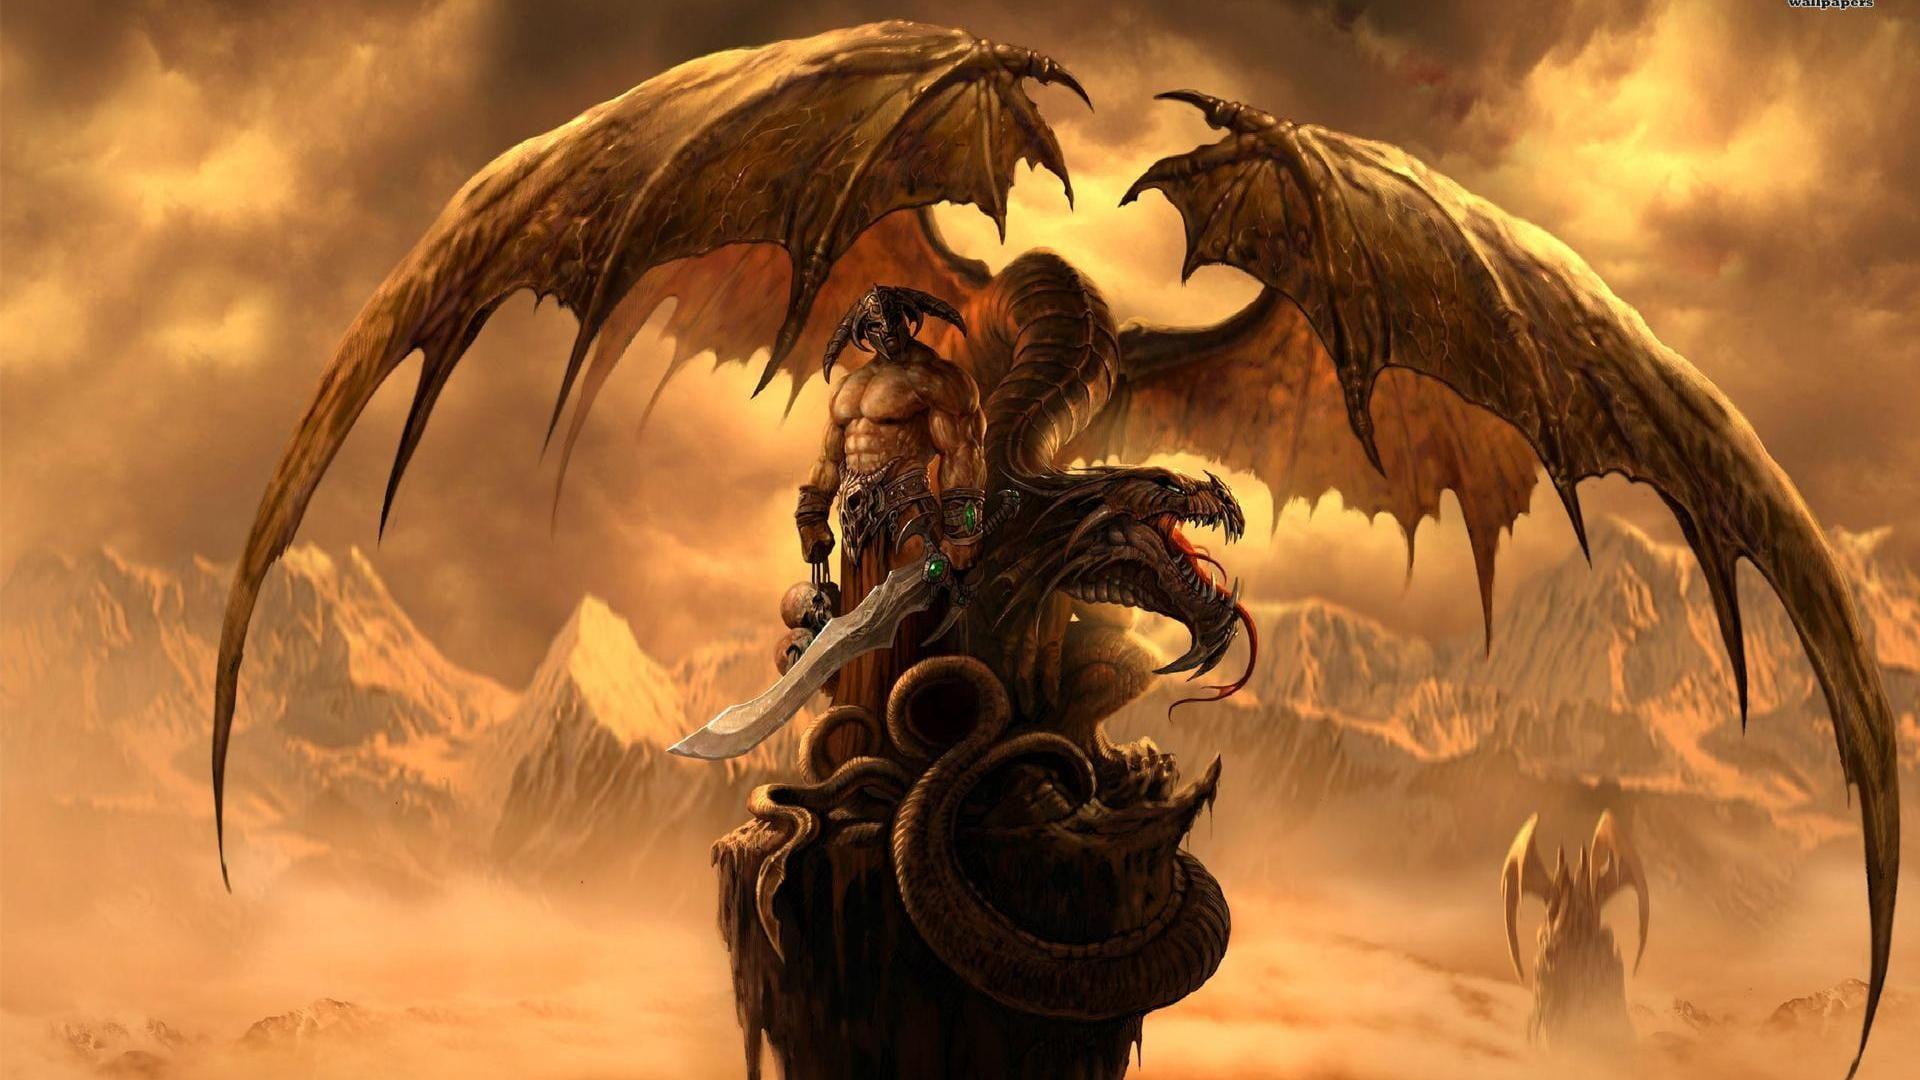 Brown dragon illustration, dragon, fantasy art, warrior